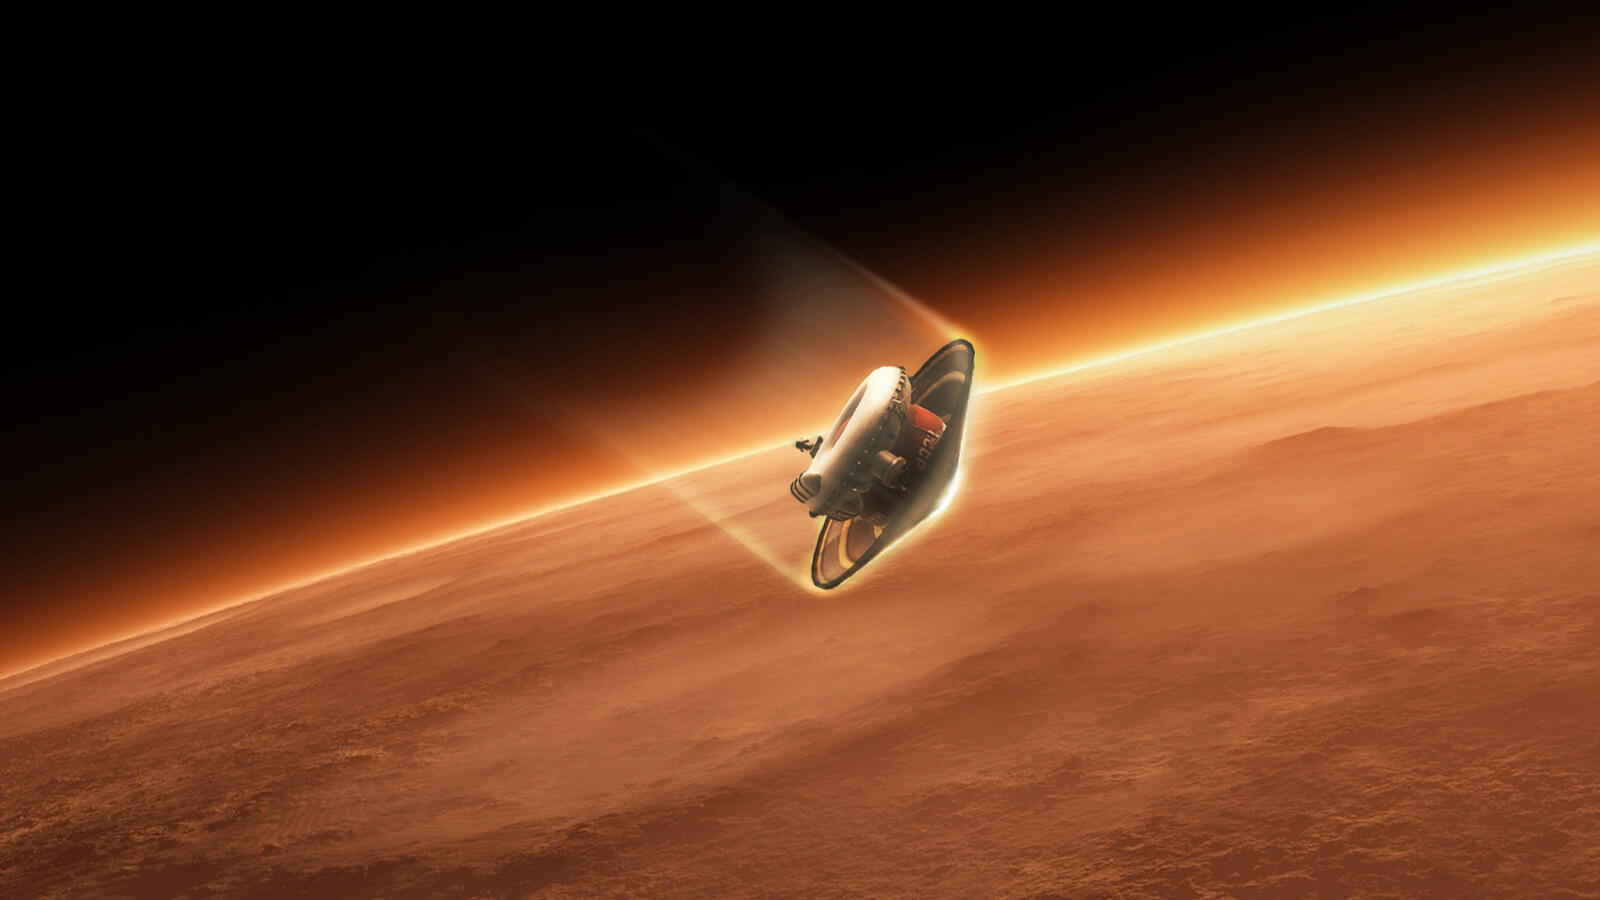 Mars 3 Landing module